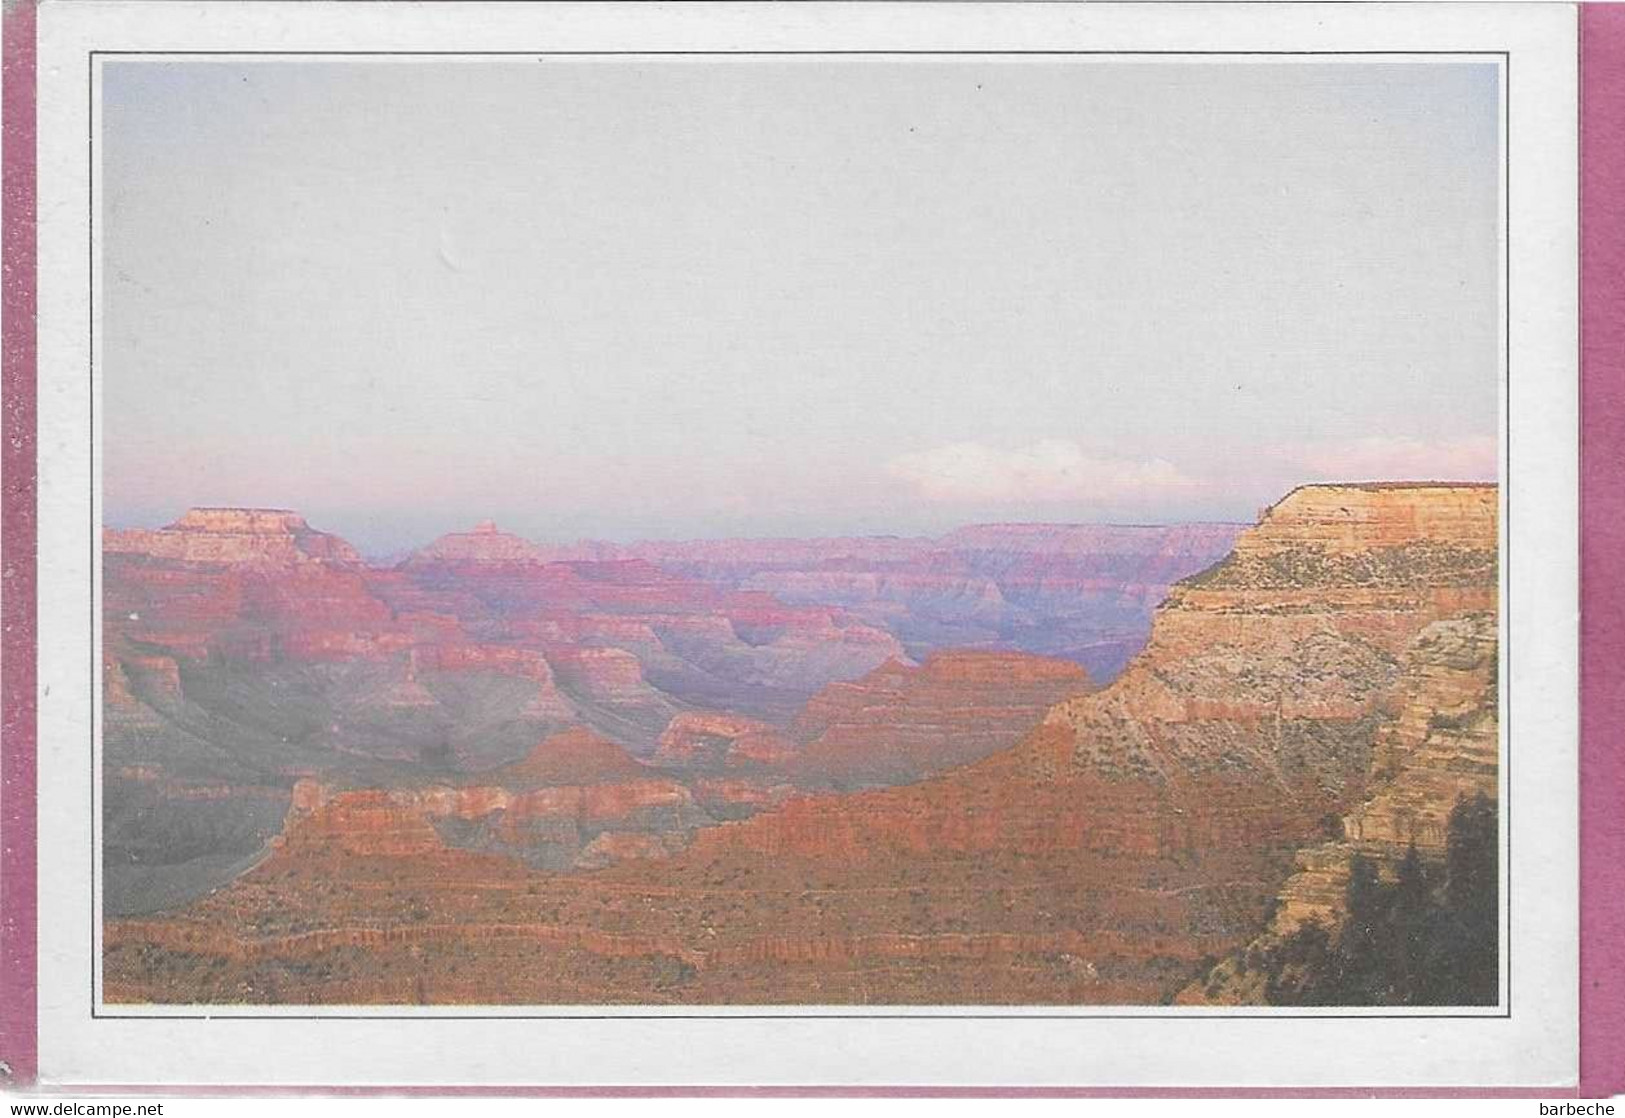 ARIZON - Le Grand Canyon - Grand Canyon